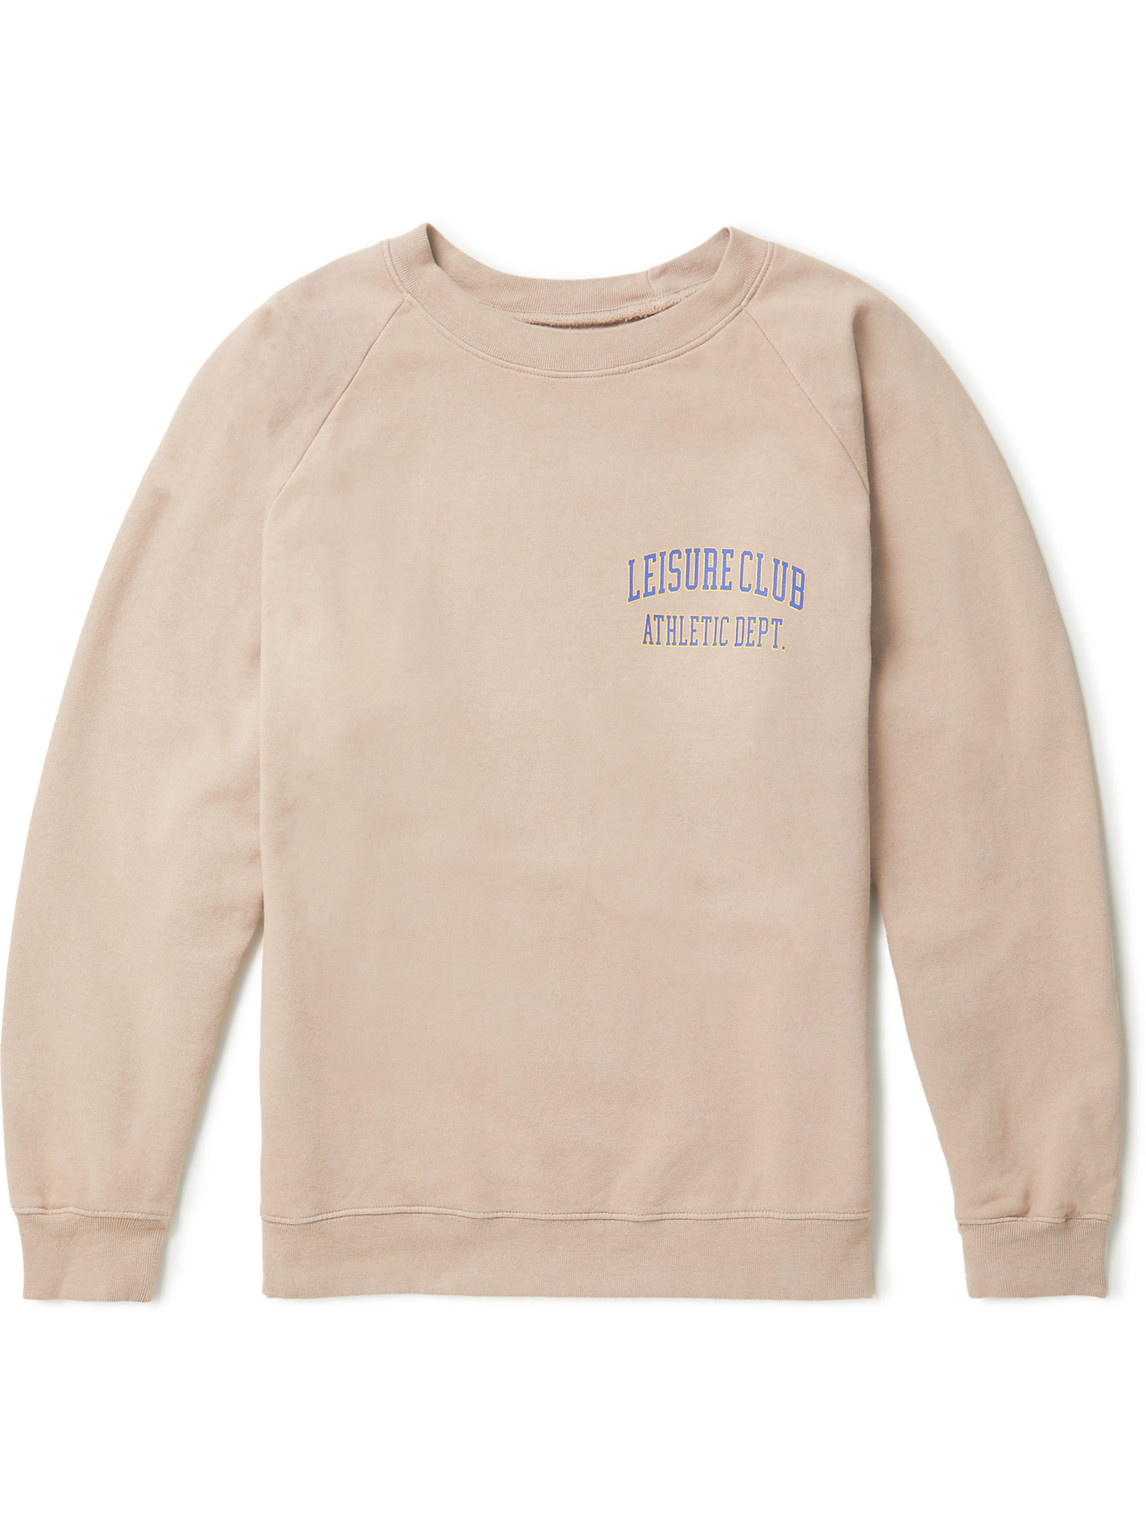 Pasadena Leisure Club Logo-print Cotton-jersey Sweatshirt In Brown